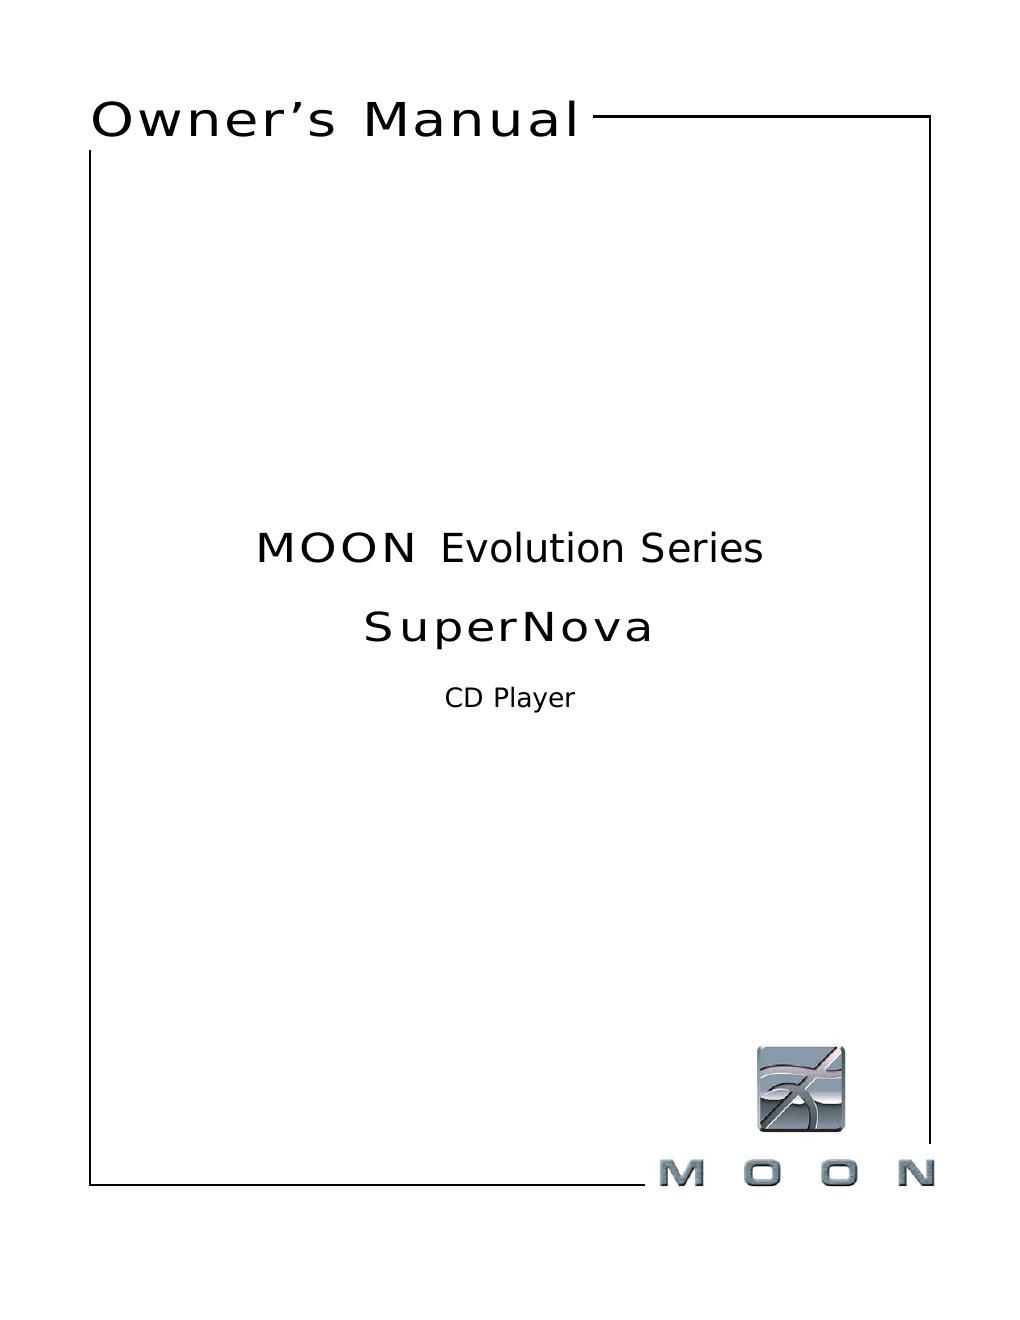 moon supernova owners manual